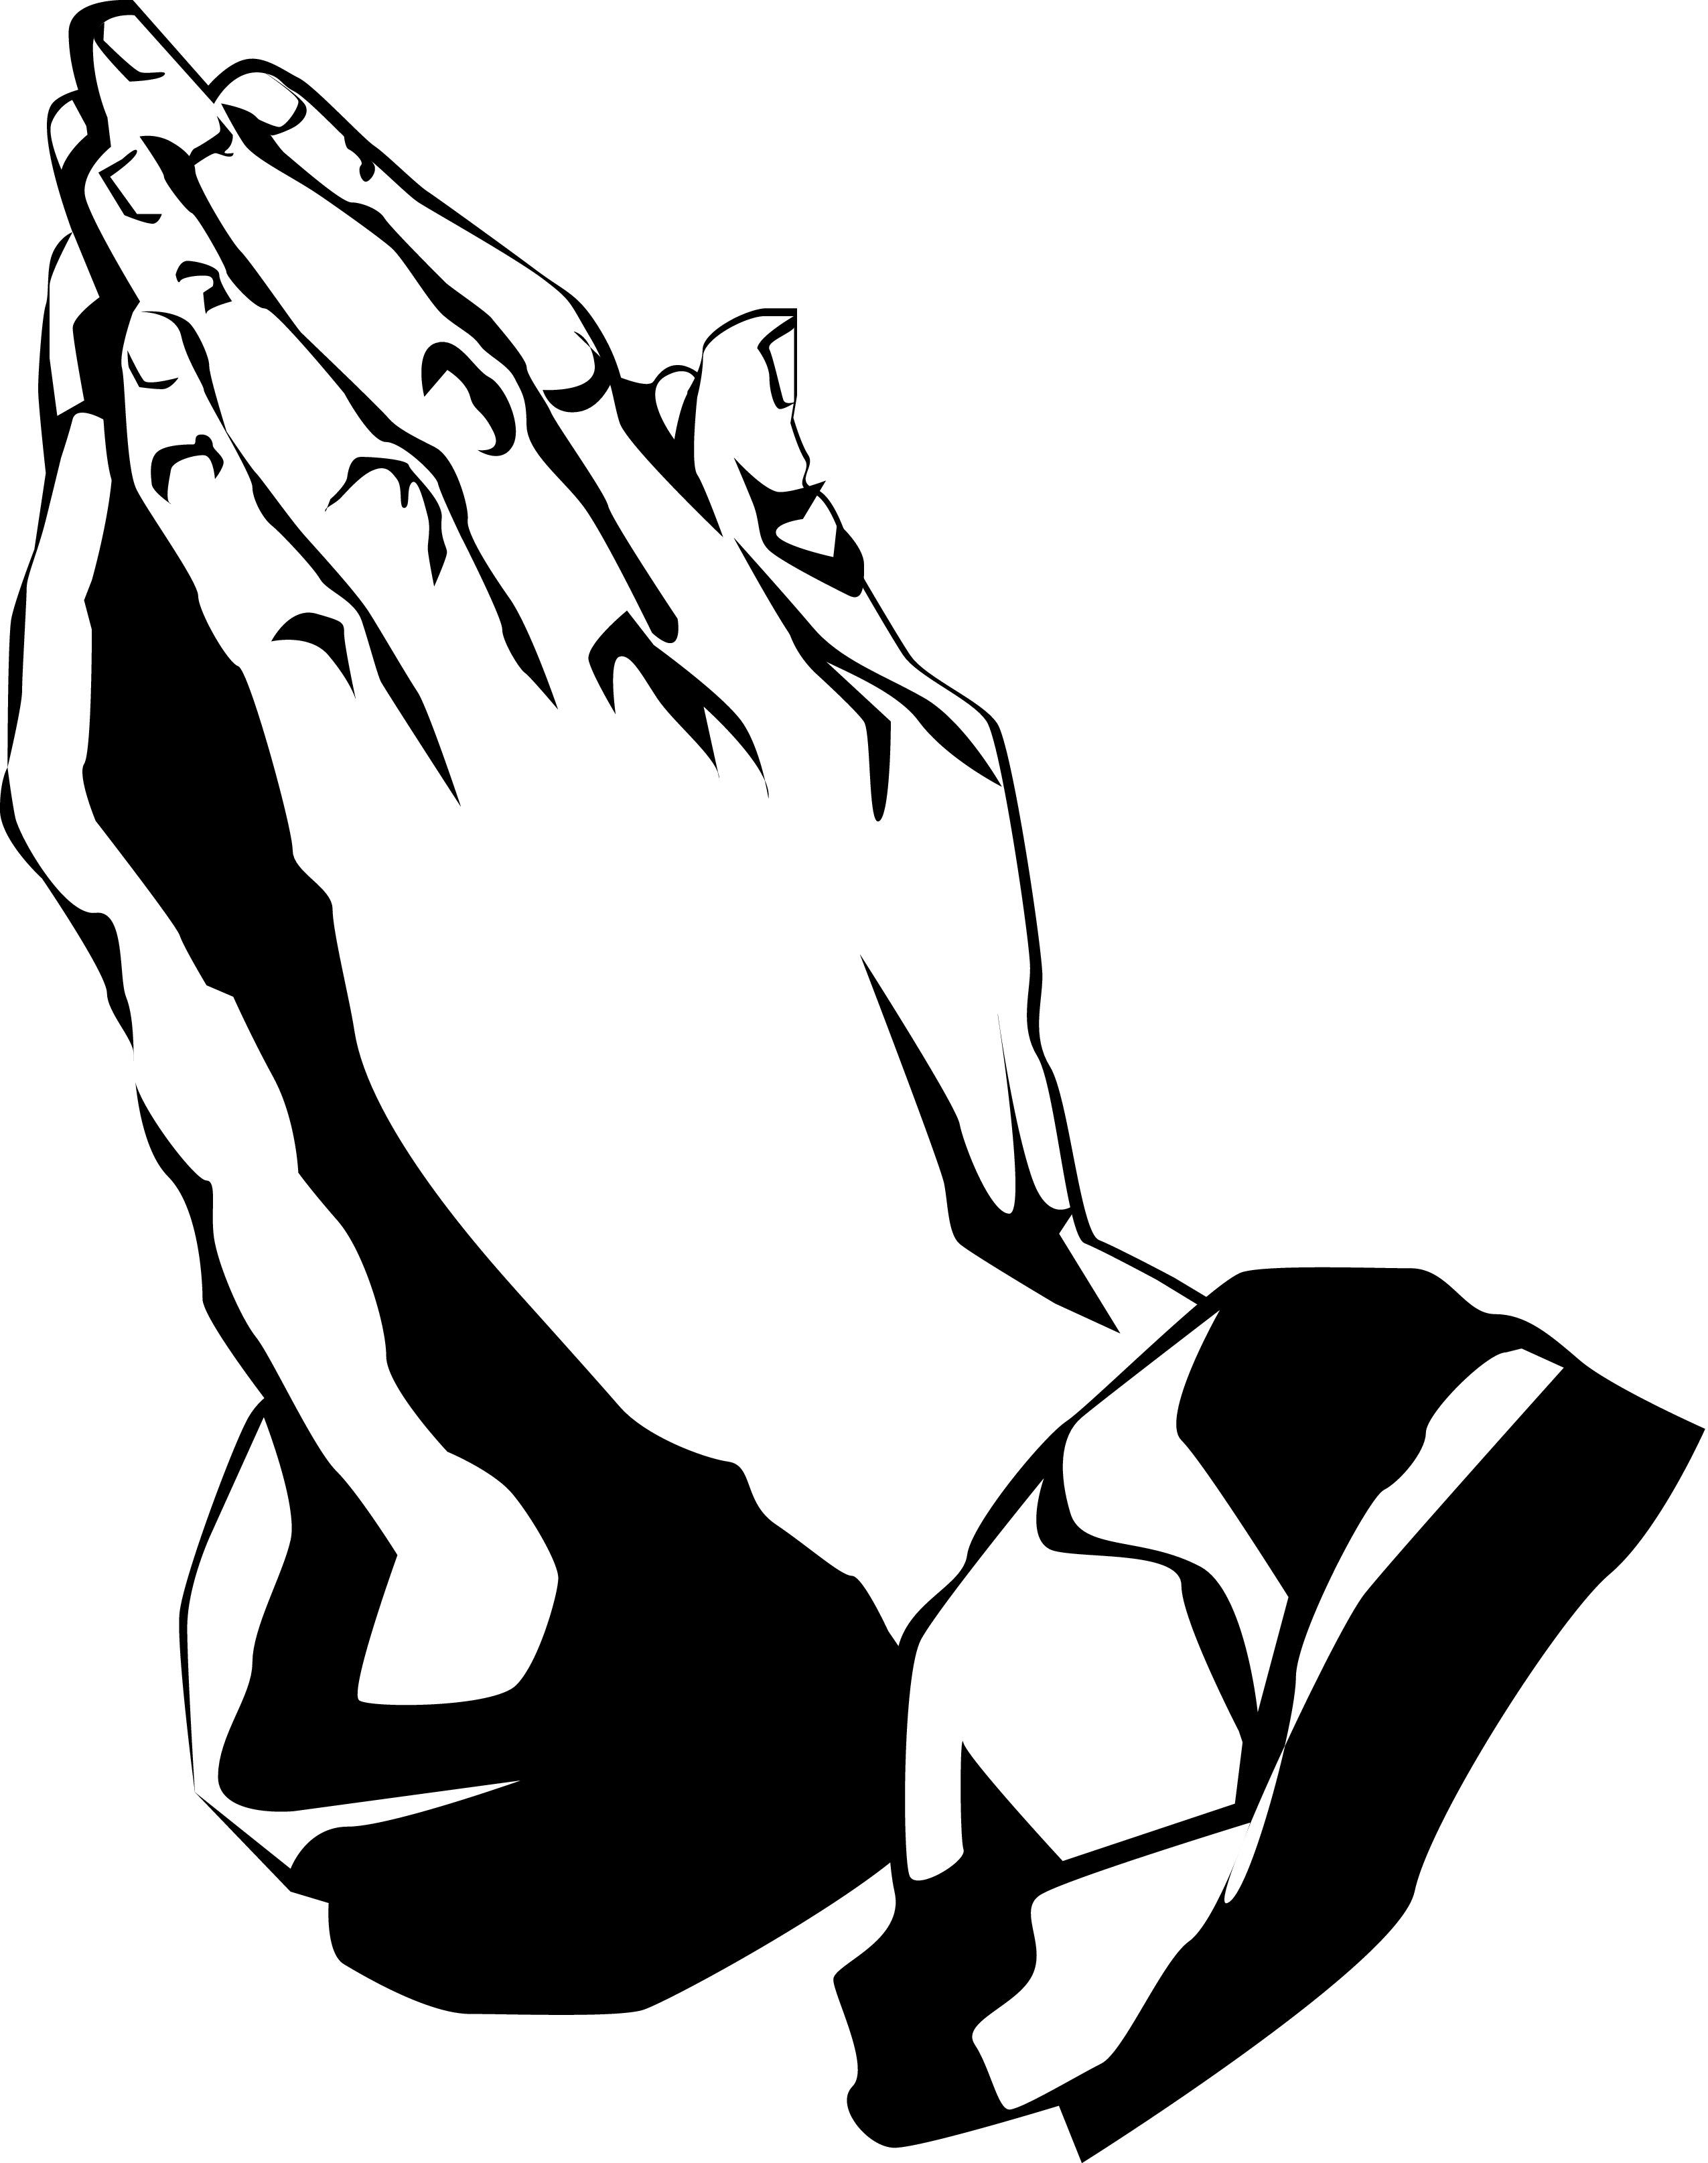 Prayer Hands Clipart | Clipart Panda - Free Clipart Images